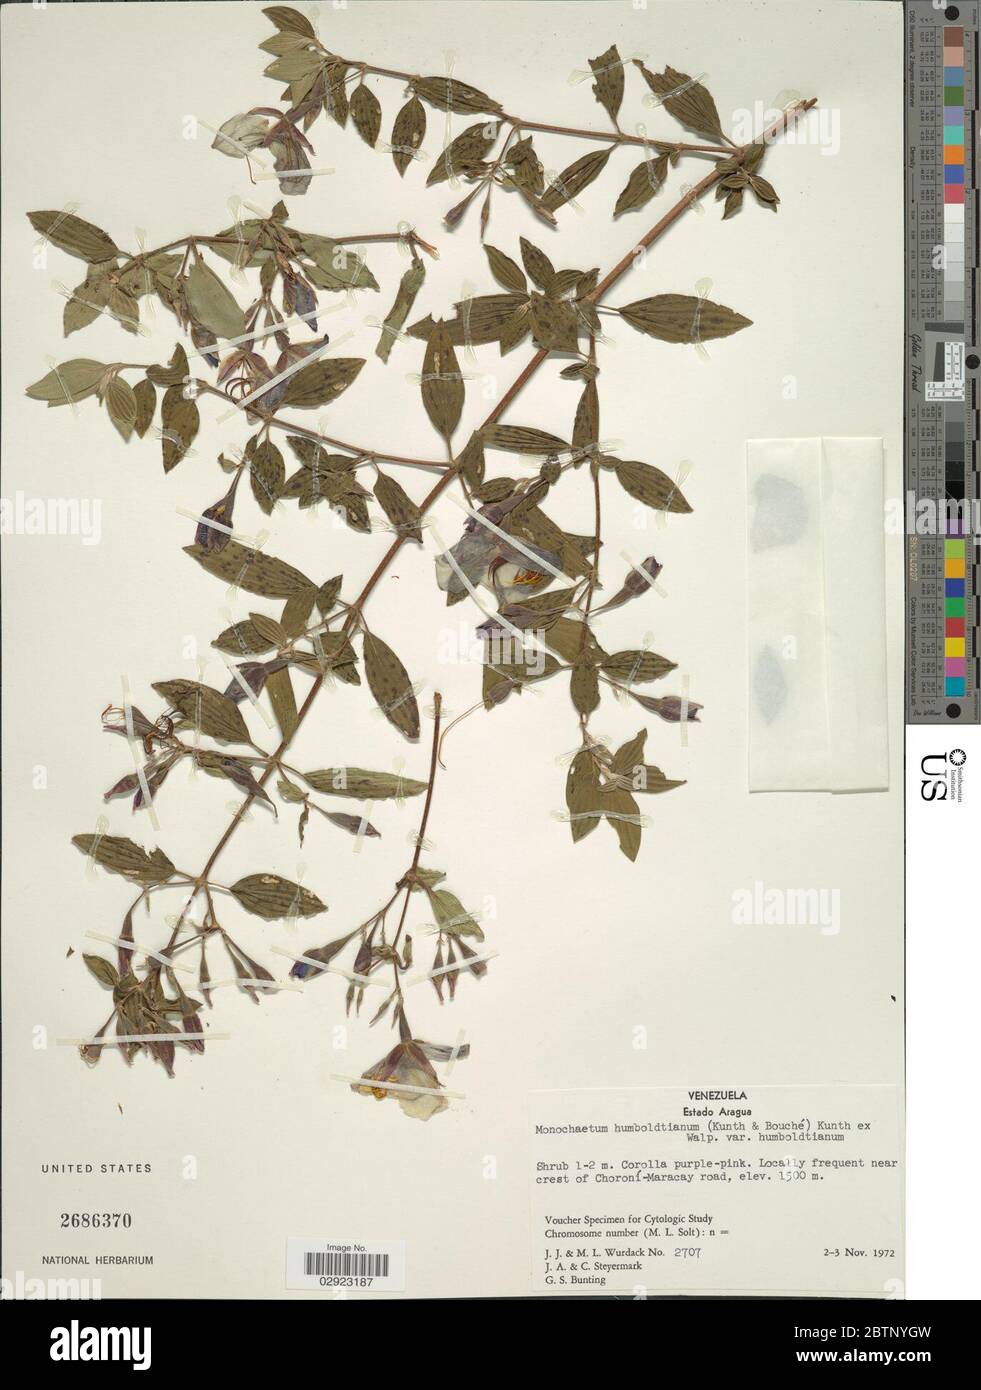 Monochaetum humboldtianum Kunth ex Walp. Stock Photo